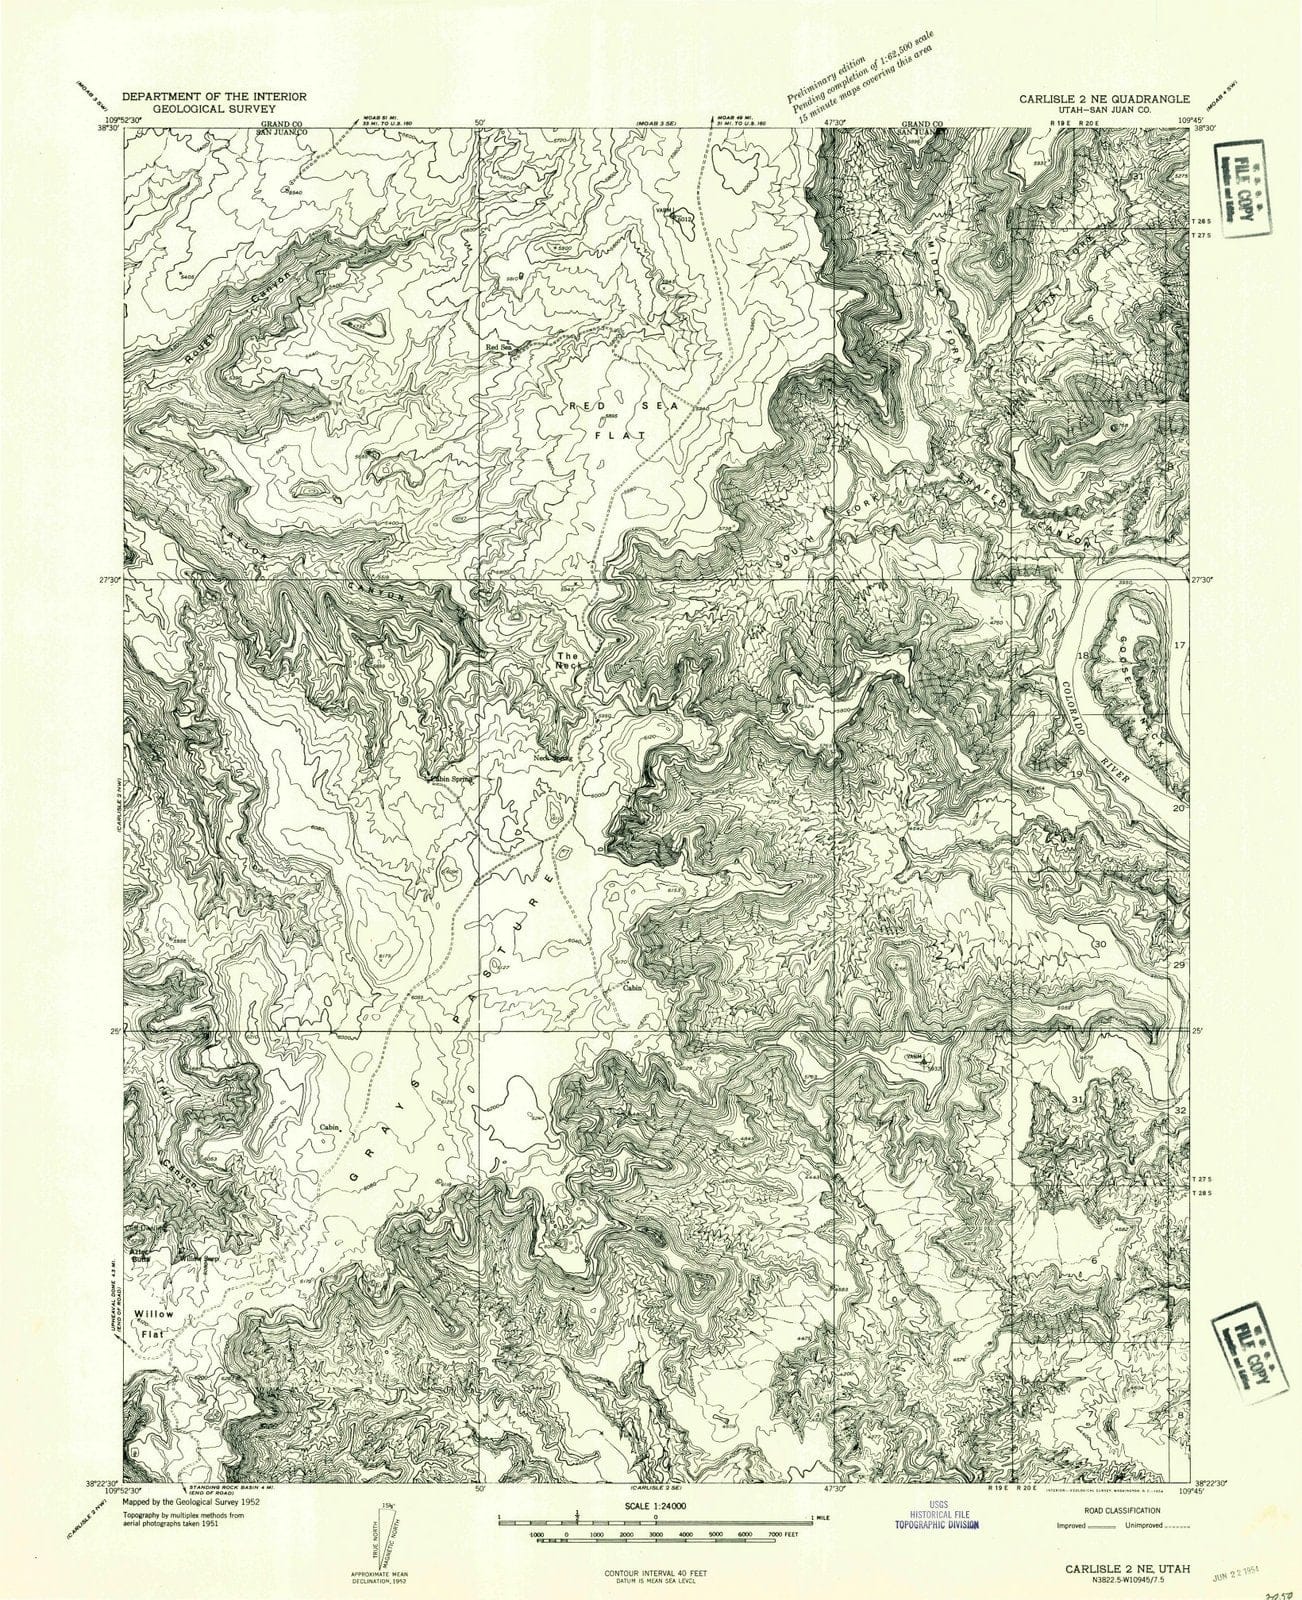 1952 Carlisle 2, UT - Utah - USGS Topographic Map